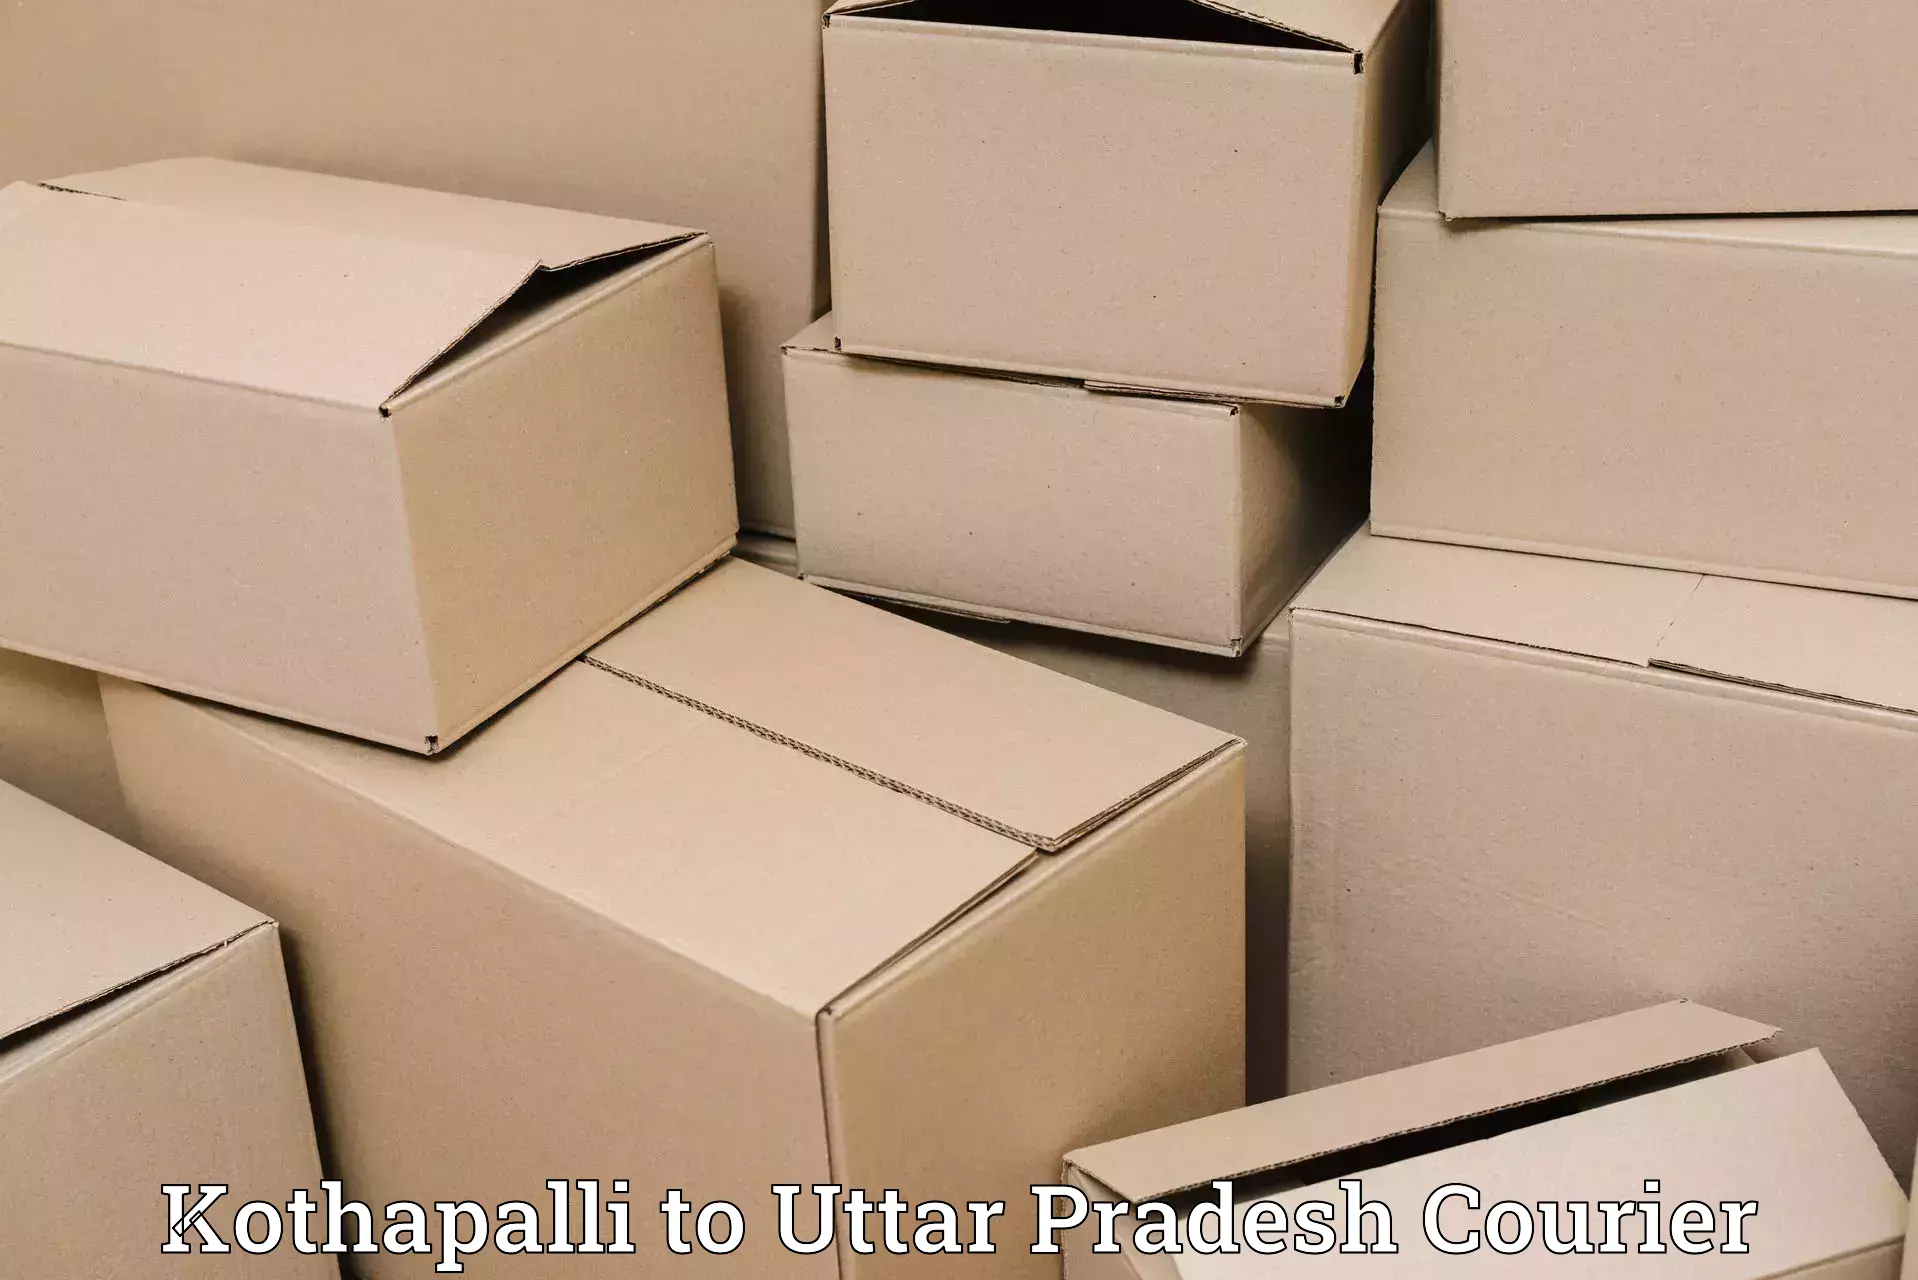 Lightweight parcel options Kothapalli to Sikandara